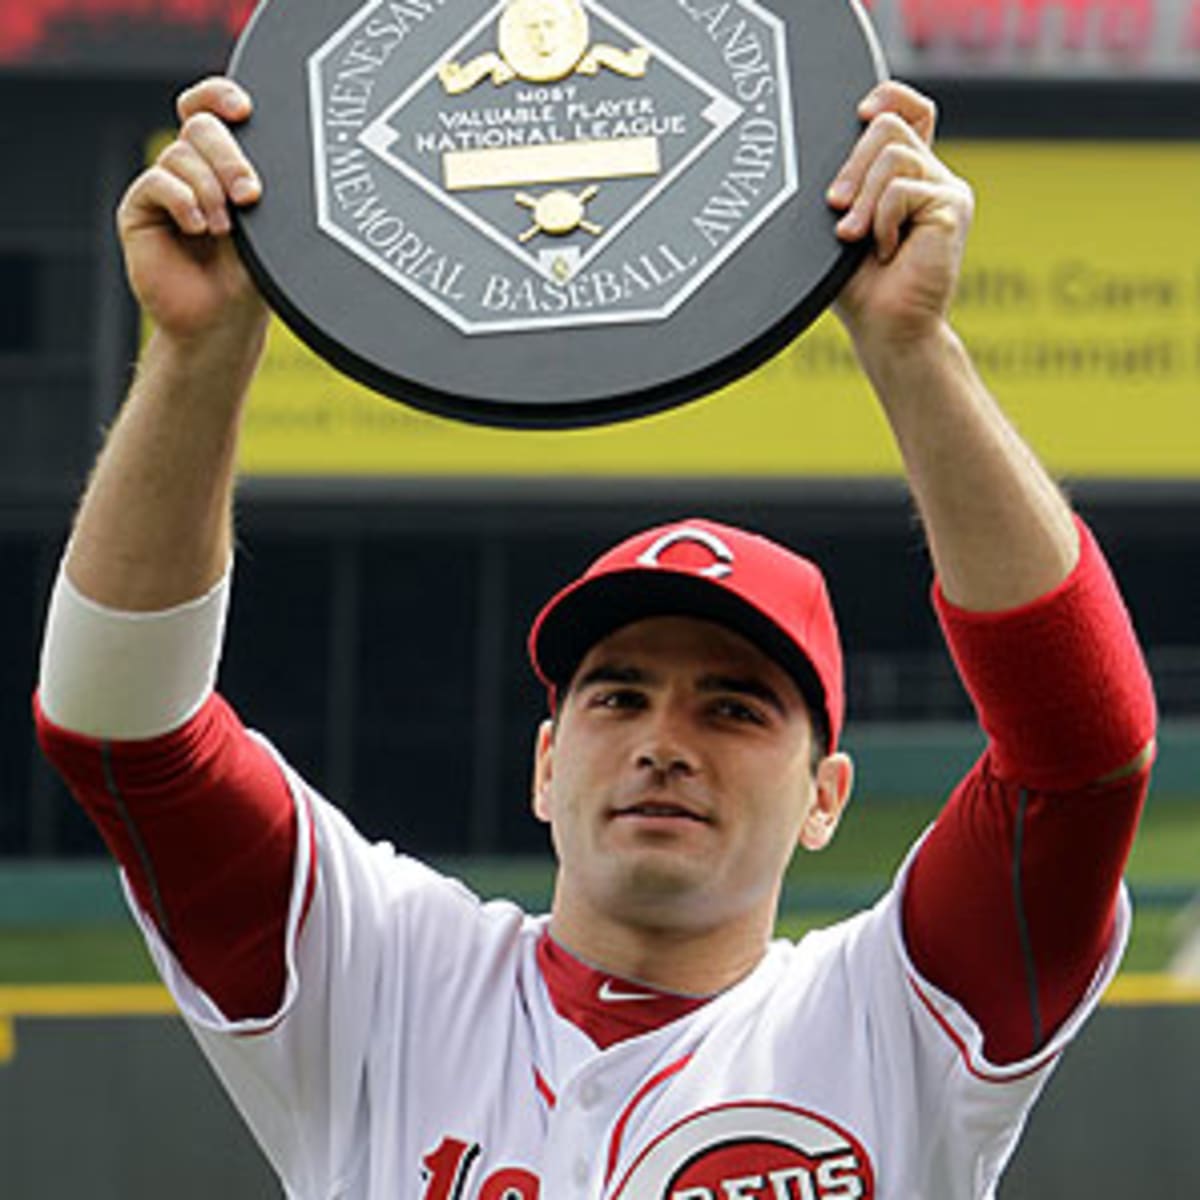 2010 MLB Postseason Awards: Reds 1B Joey Votto Wins NL MVP